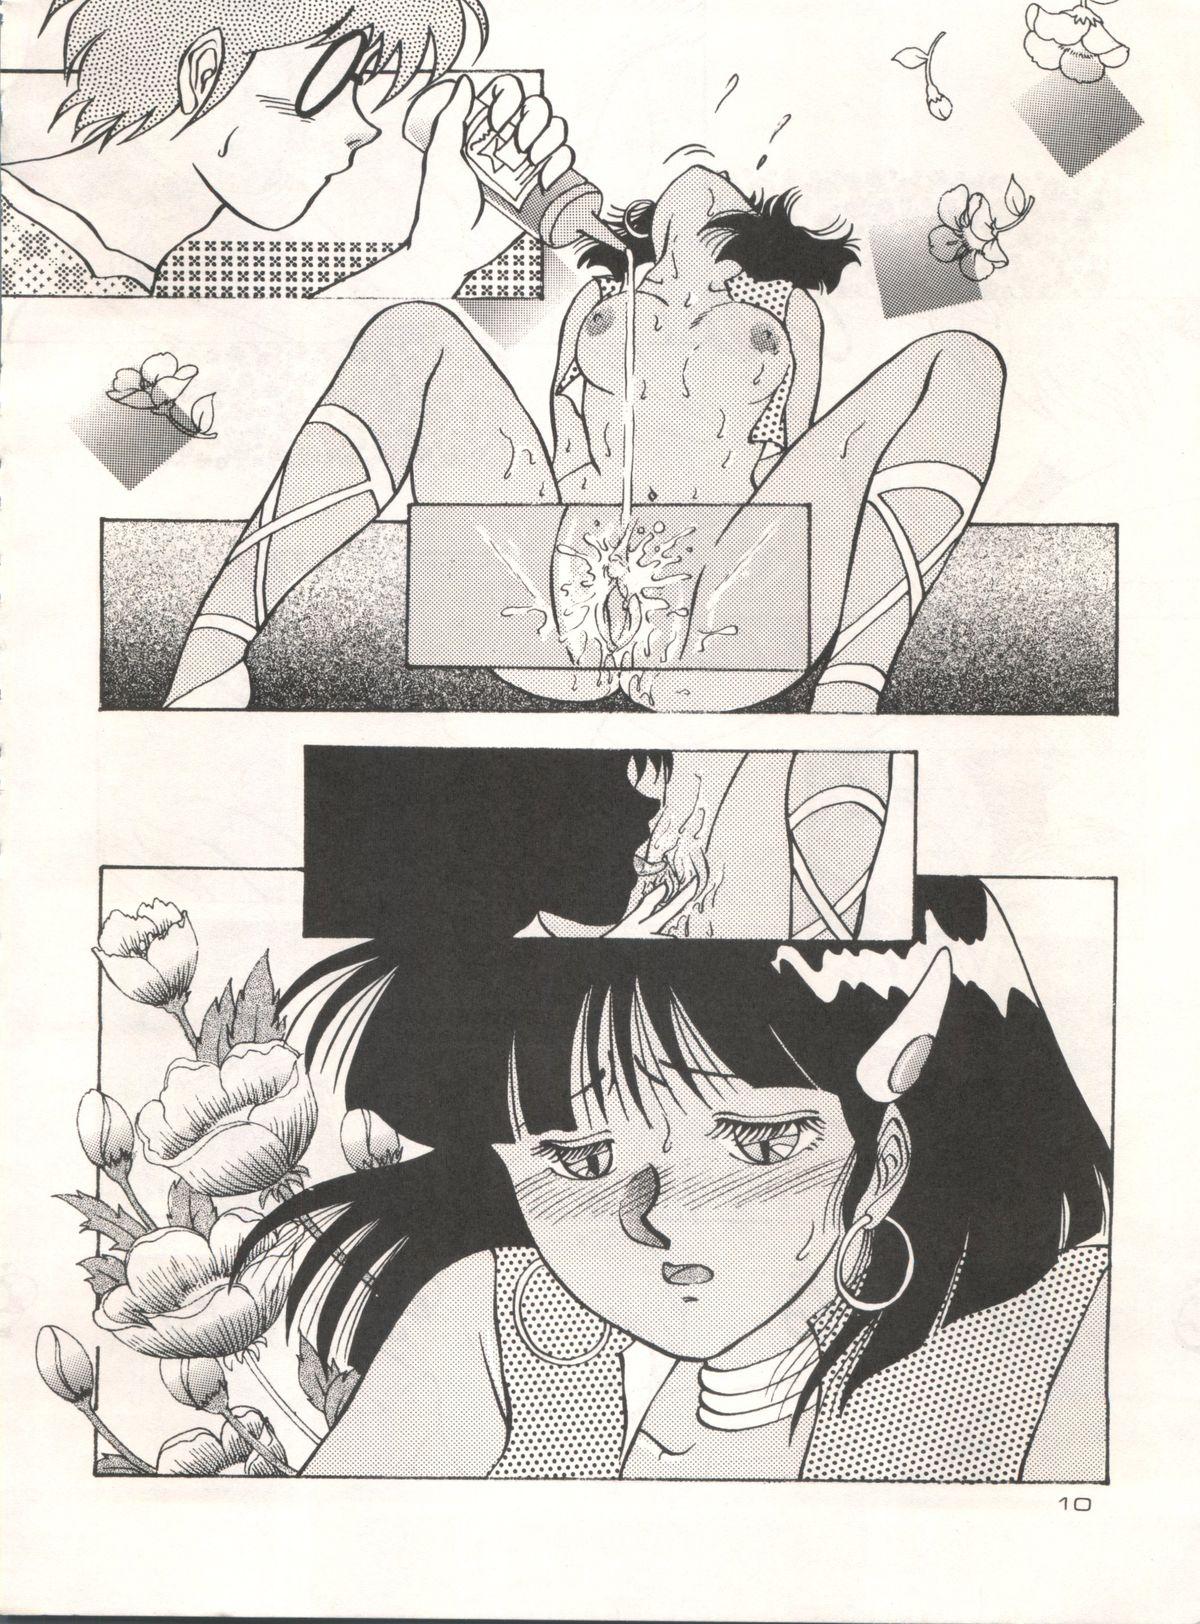 Secret Nadia Girls in Emerald Sea vol. 2 - Minies Club 23 - Fushigi no umi no nadia Family - Page 10